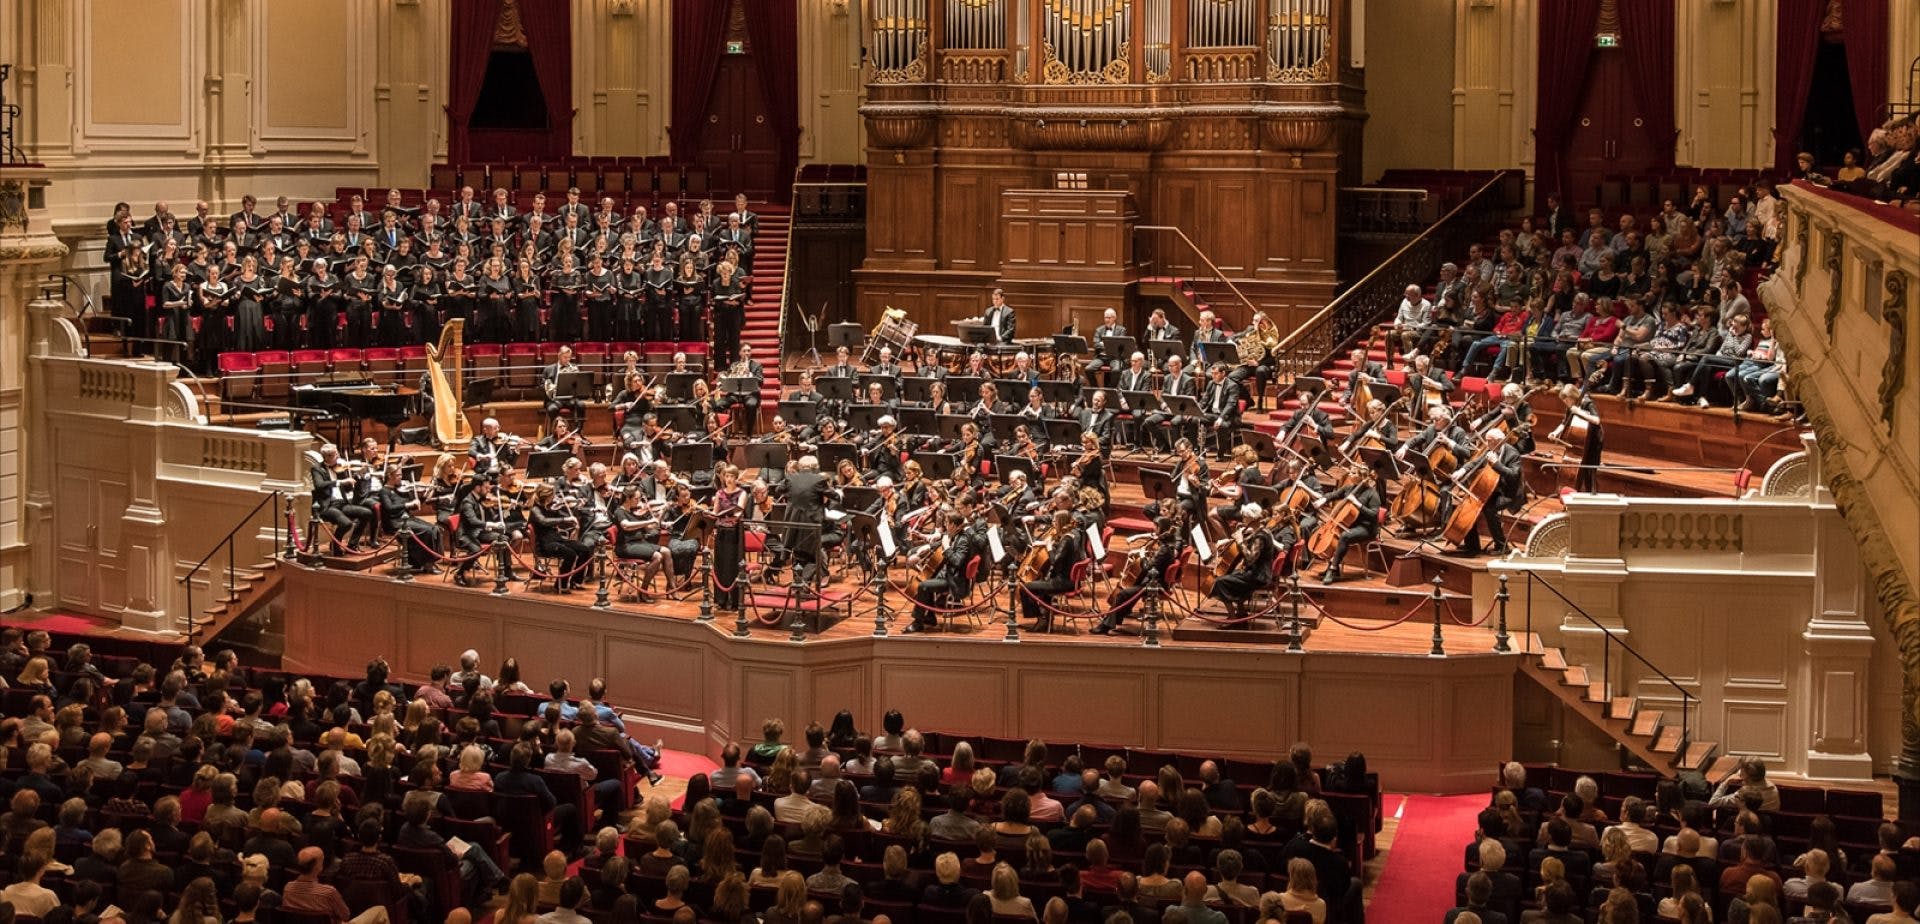 Weense en Amsterdamse musici samen in concert met Mahler, Verdi en Mascagni